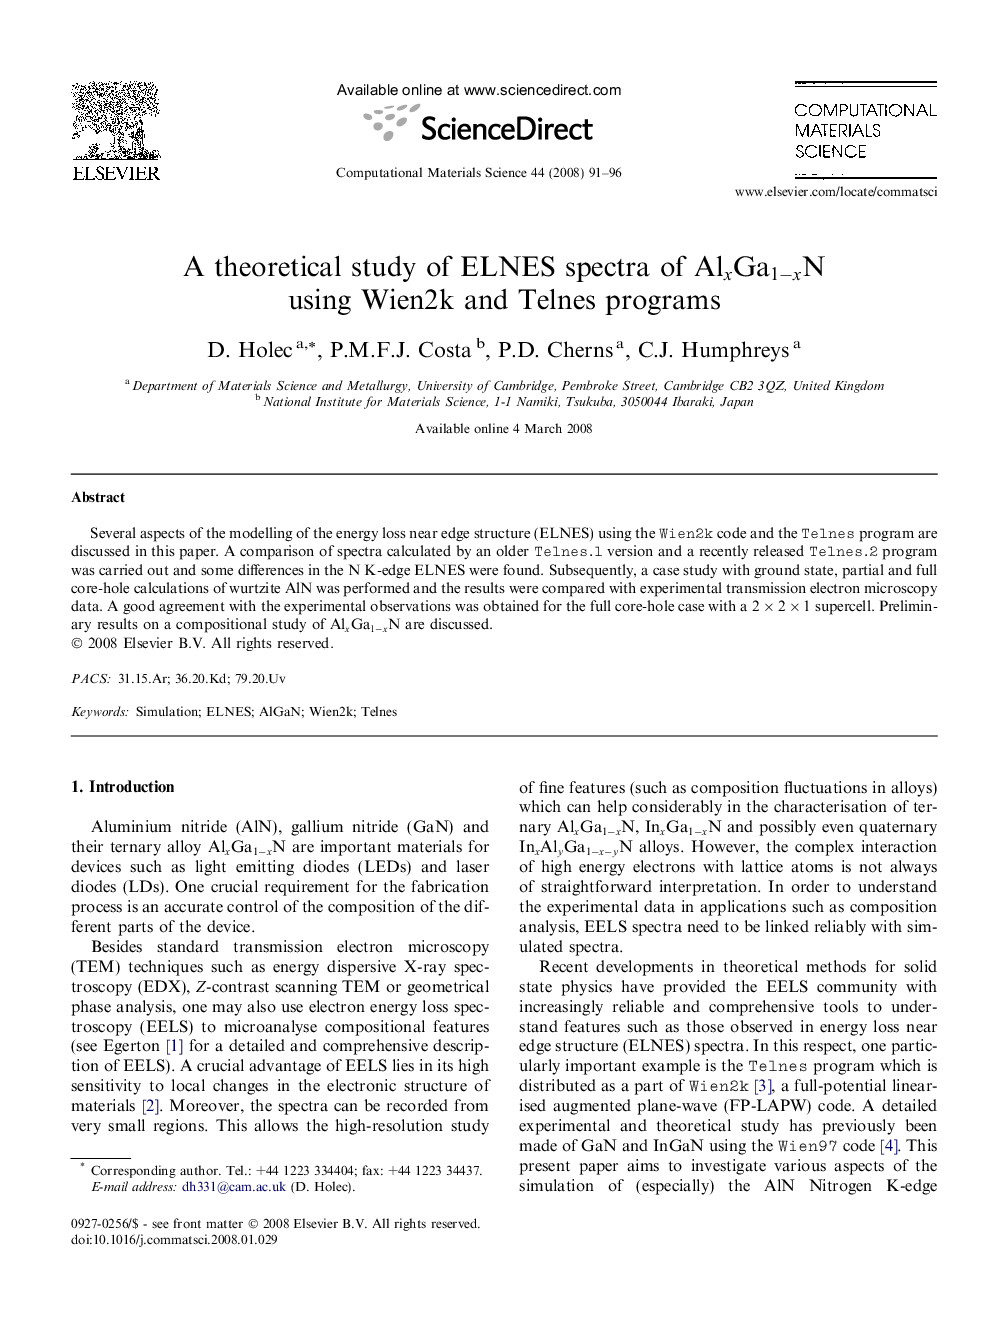 A theoretical study of ELNES spectra of AlxGa1-xN using Wien2k and Telnes programs